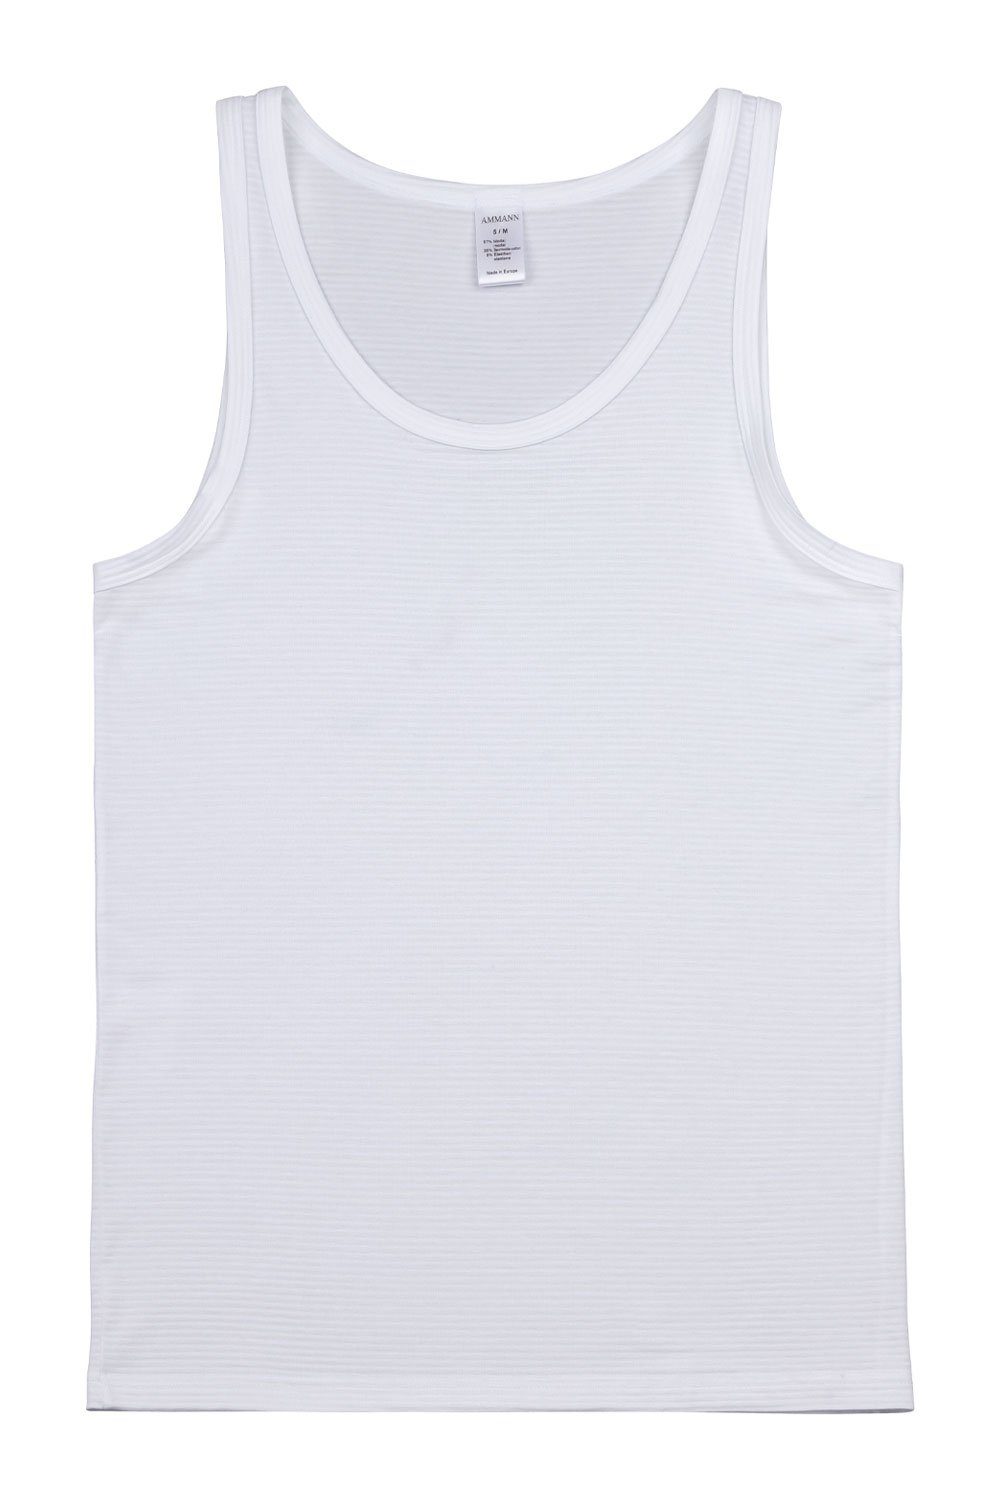 Ammann Achselhemd Athletic-Shirt 700160 weiß